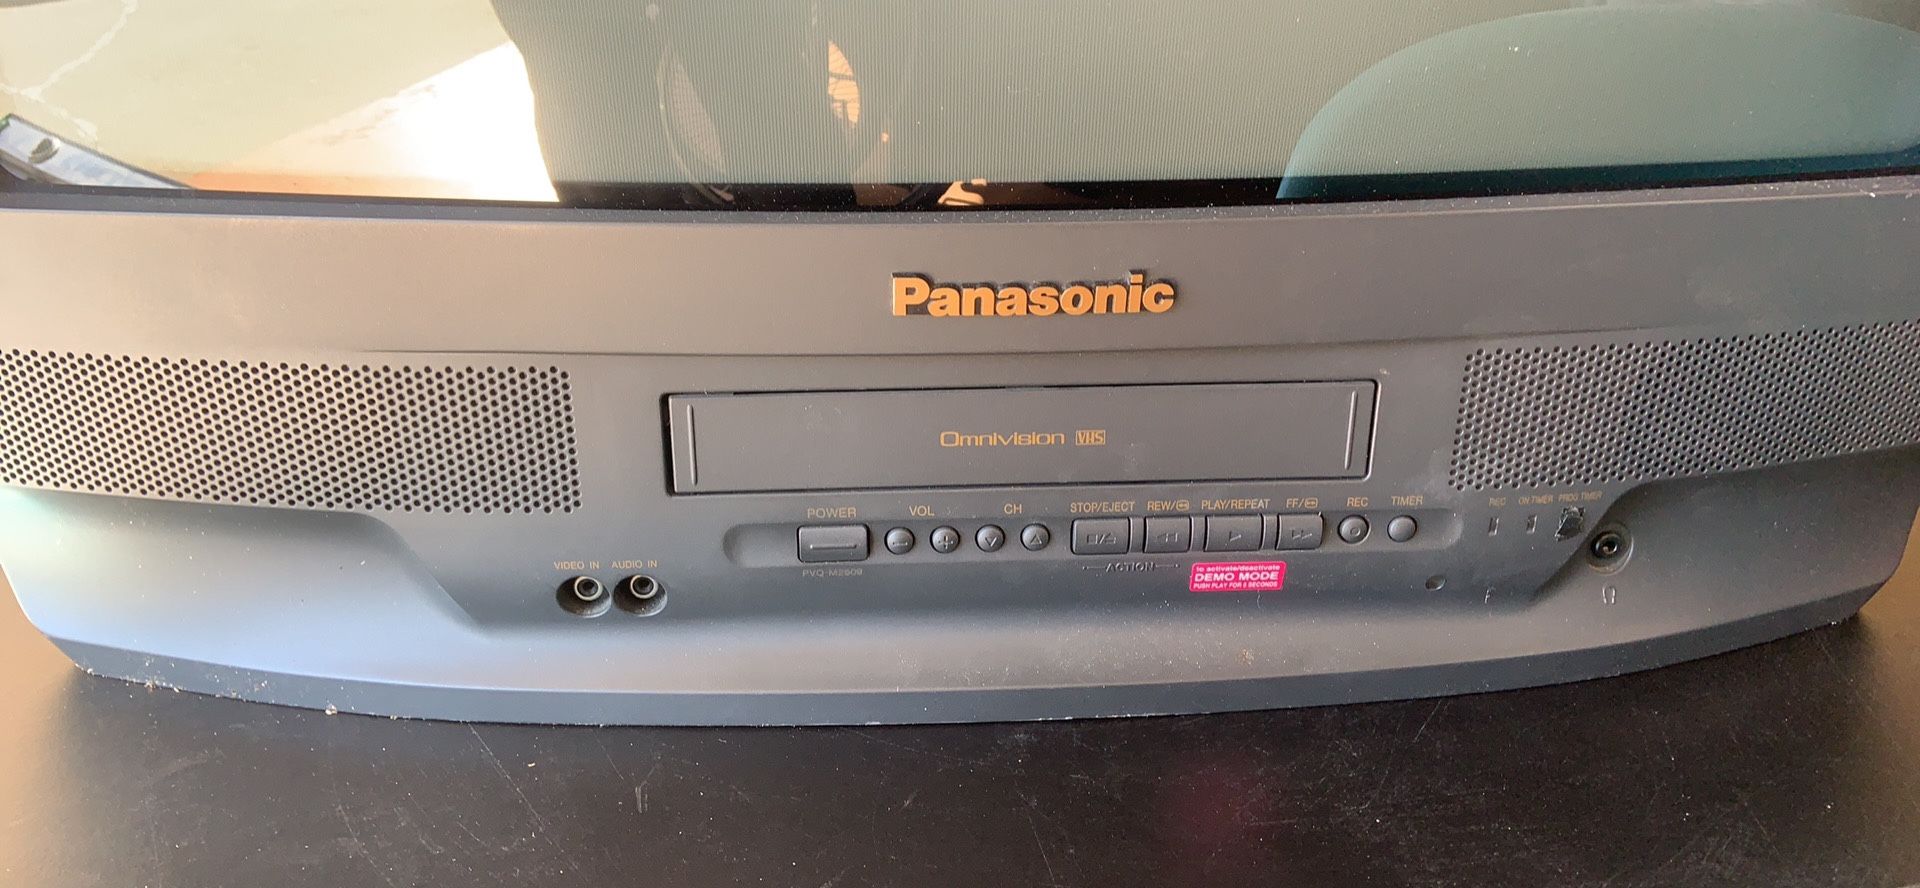 Panasonic old fashioned tv